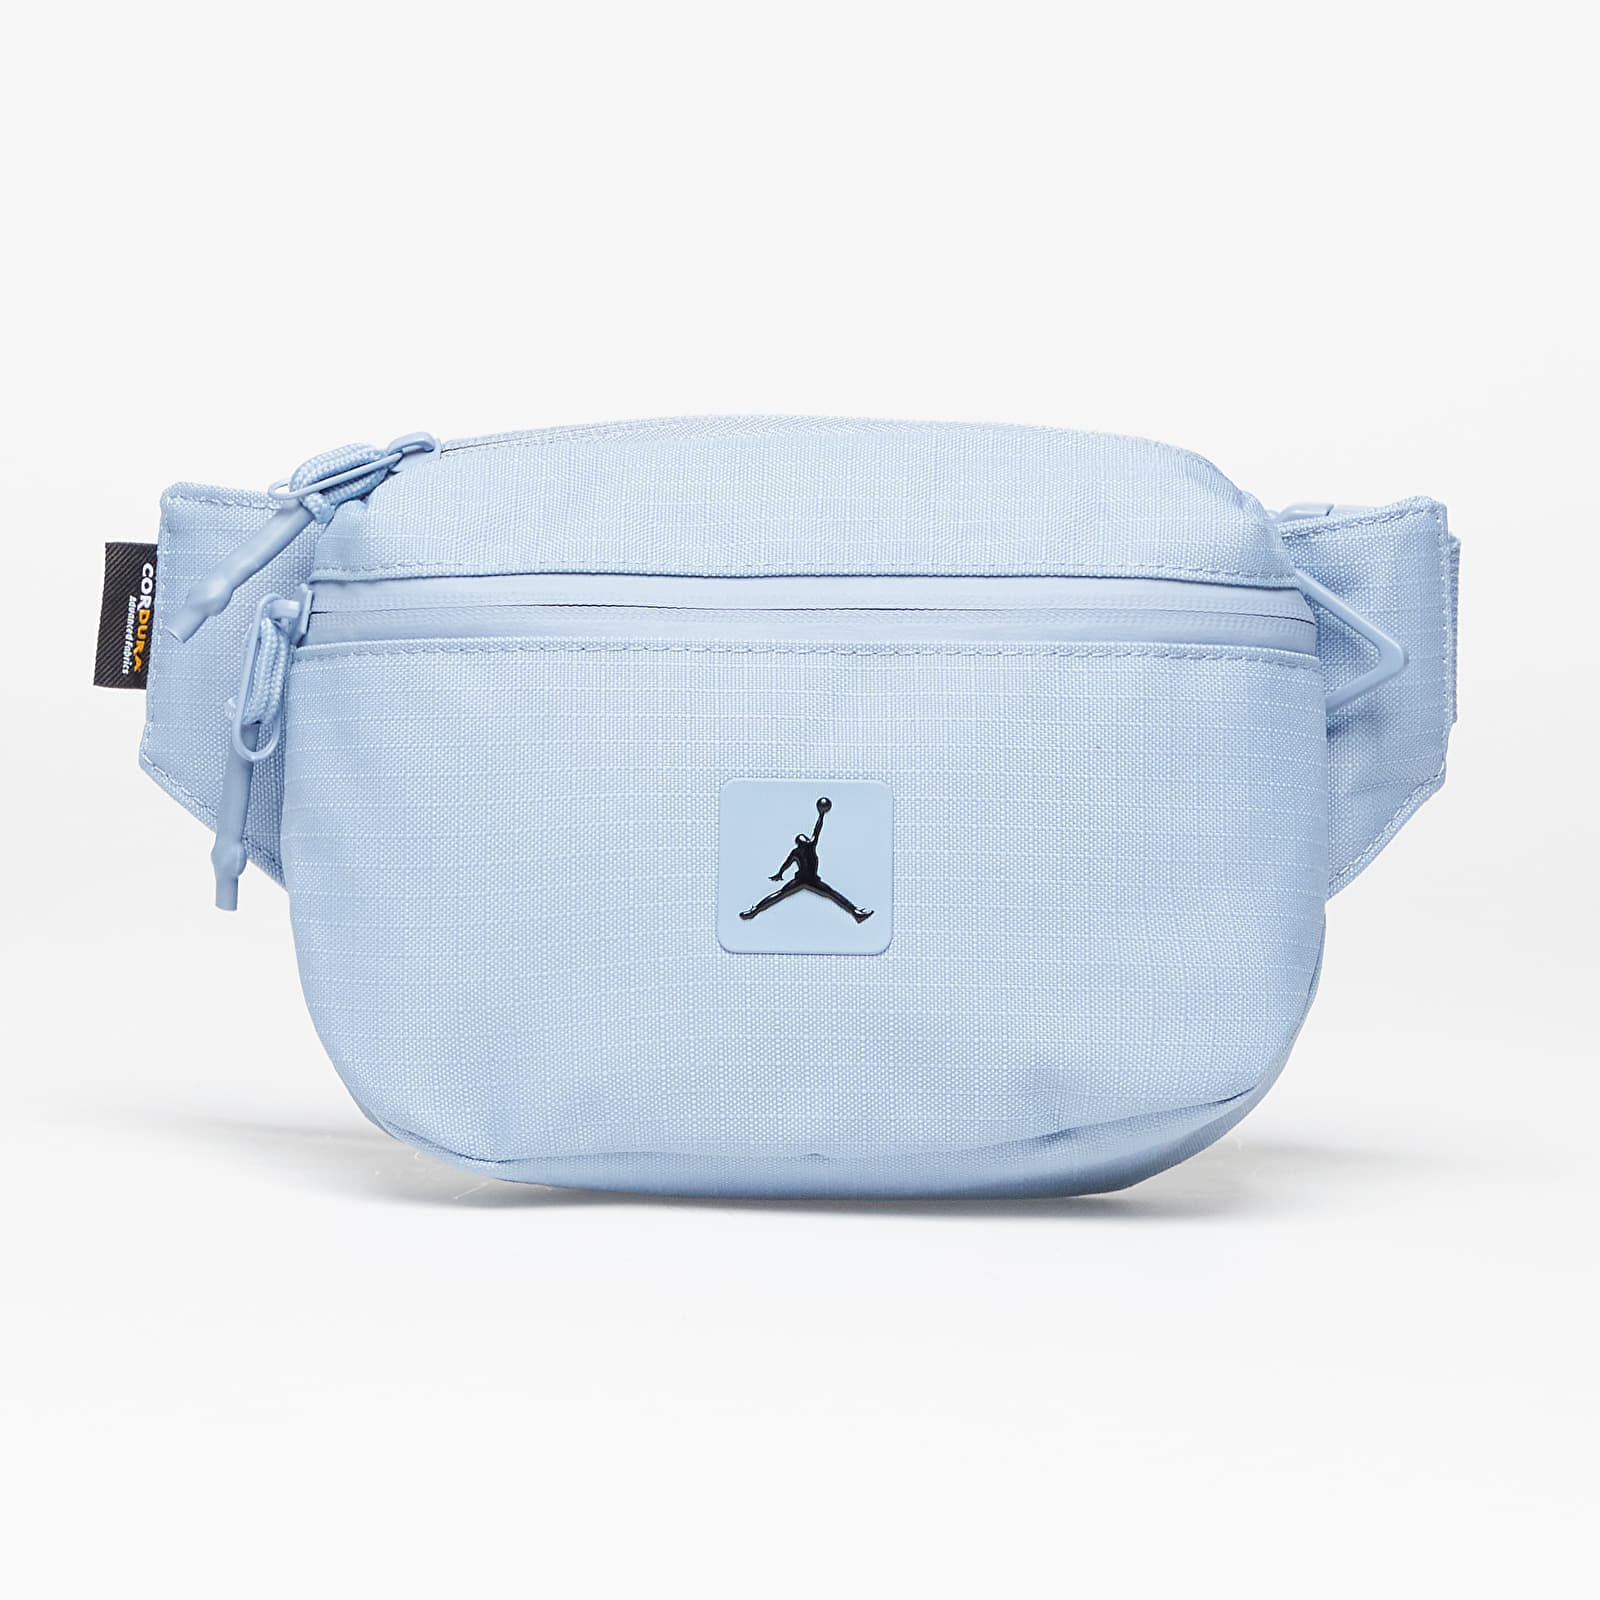 Jordan - cordura franchise cross body bag blue grey